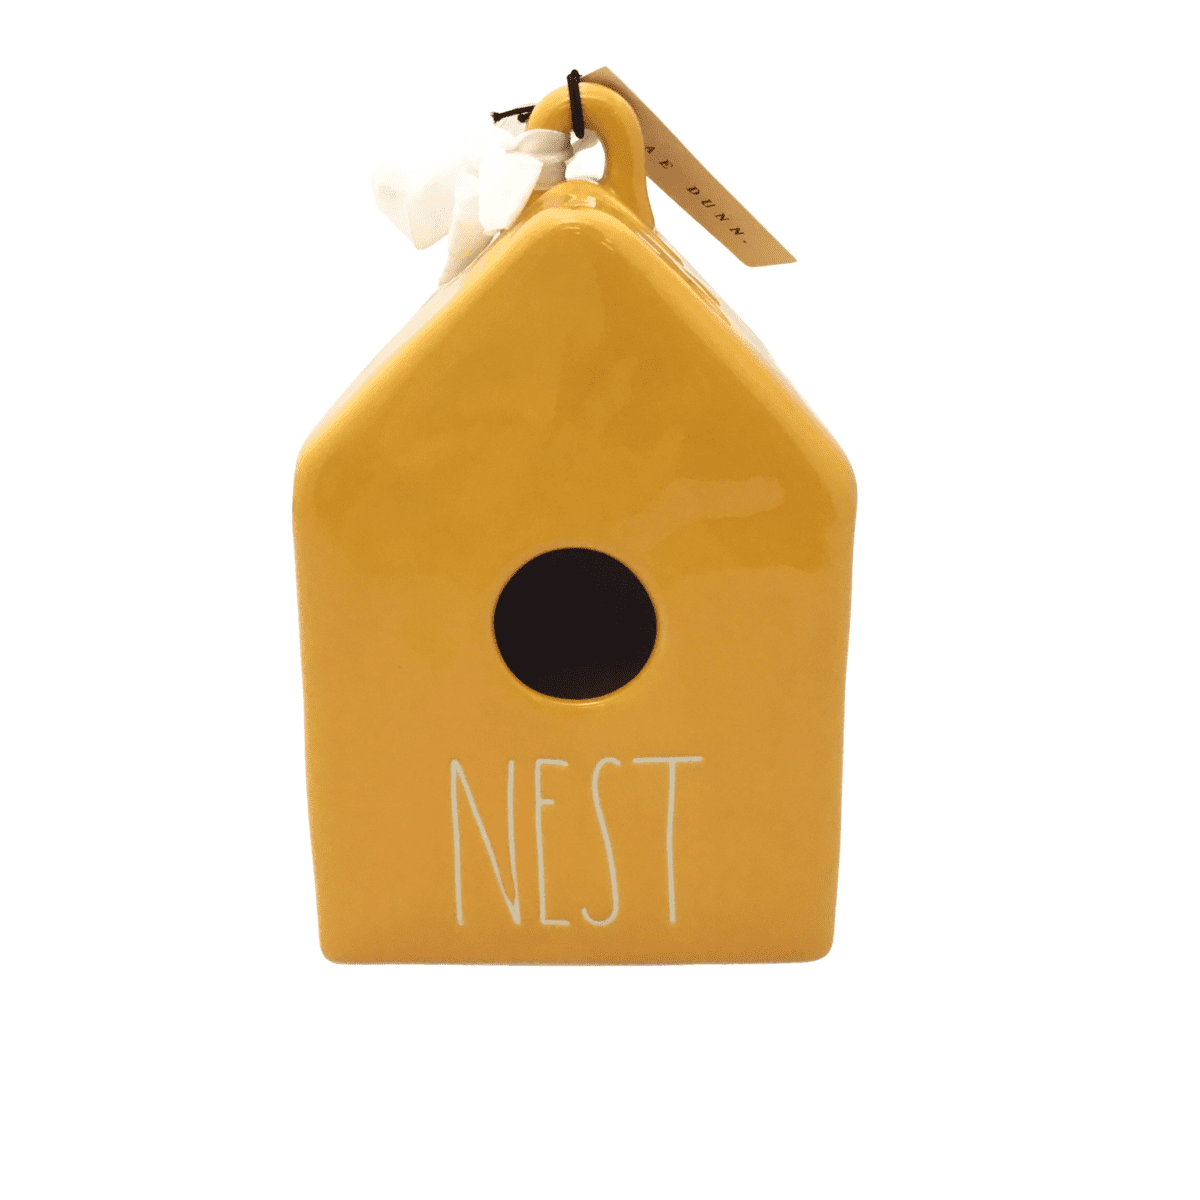 Rae Dunn Decorative ceramic Birdhouse wth Nest Logo_01